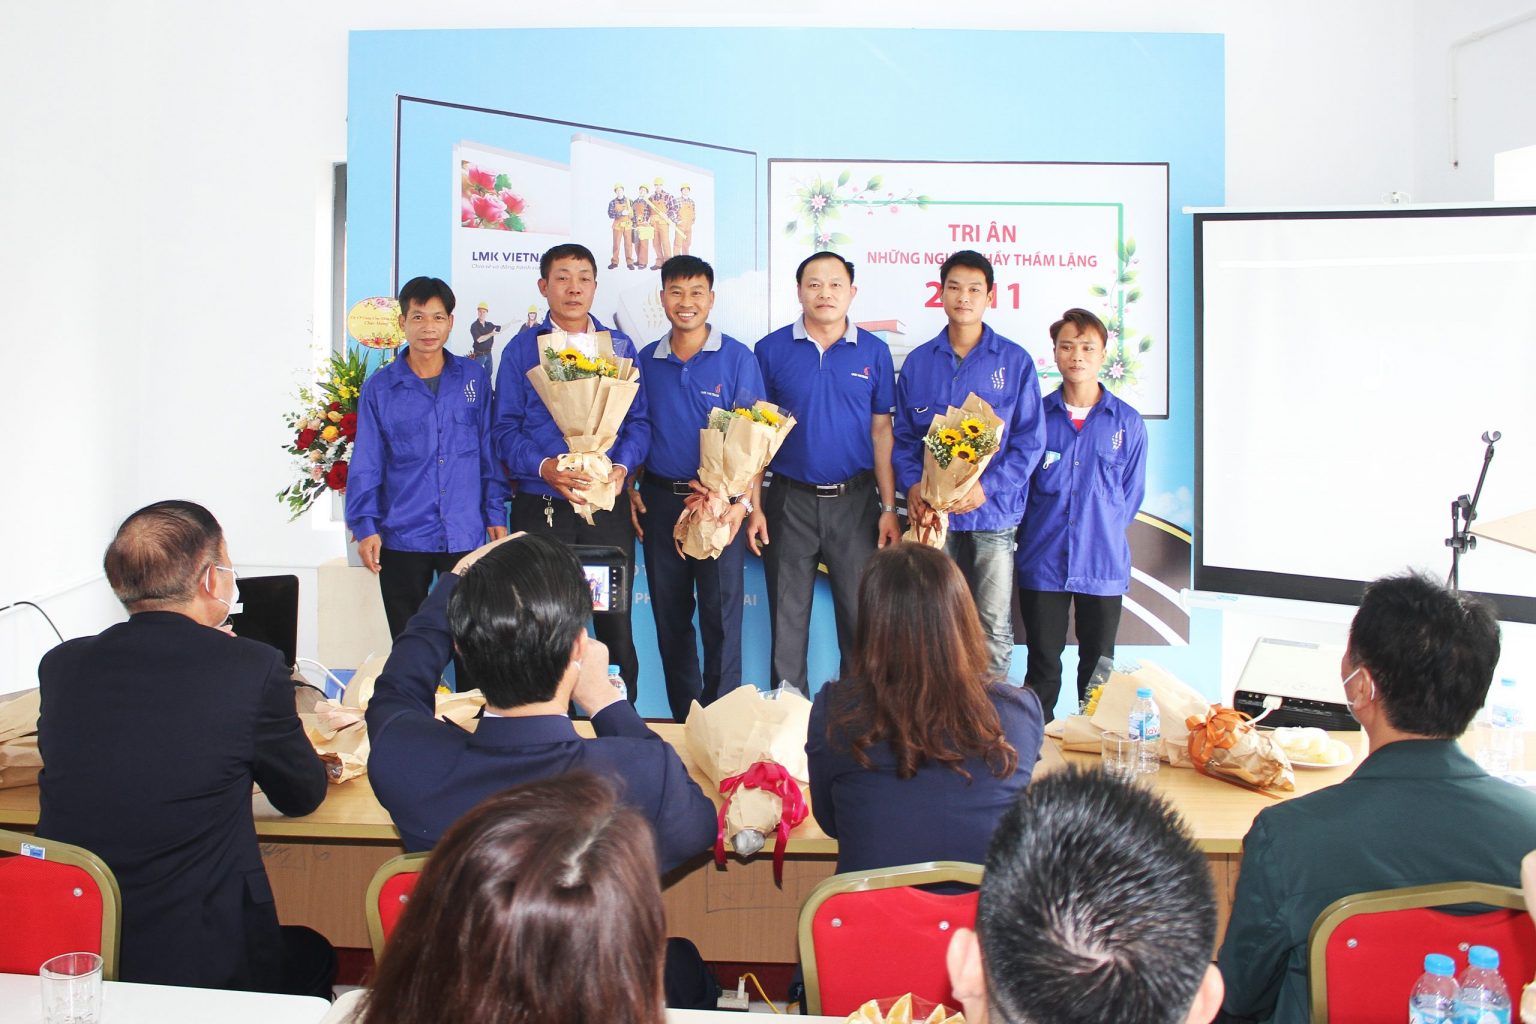 Celebrating 39 years of Vietnamese Teachers' Day on November 20th: Vietnam Manpower - LMK Vietnam Grateful"Silent Teachers"